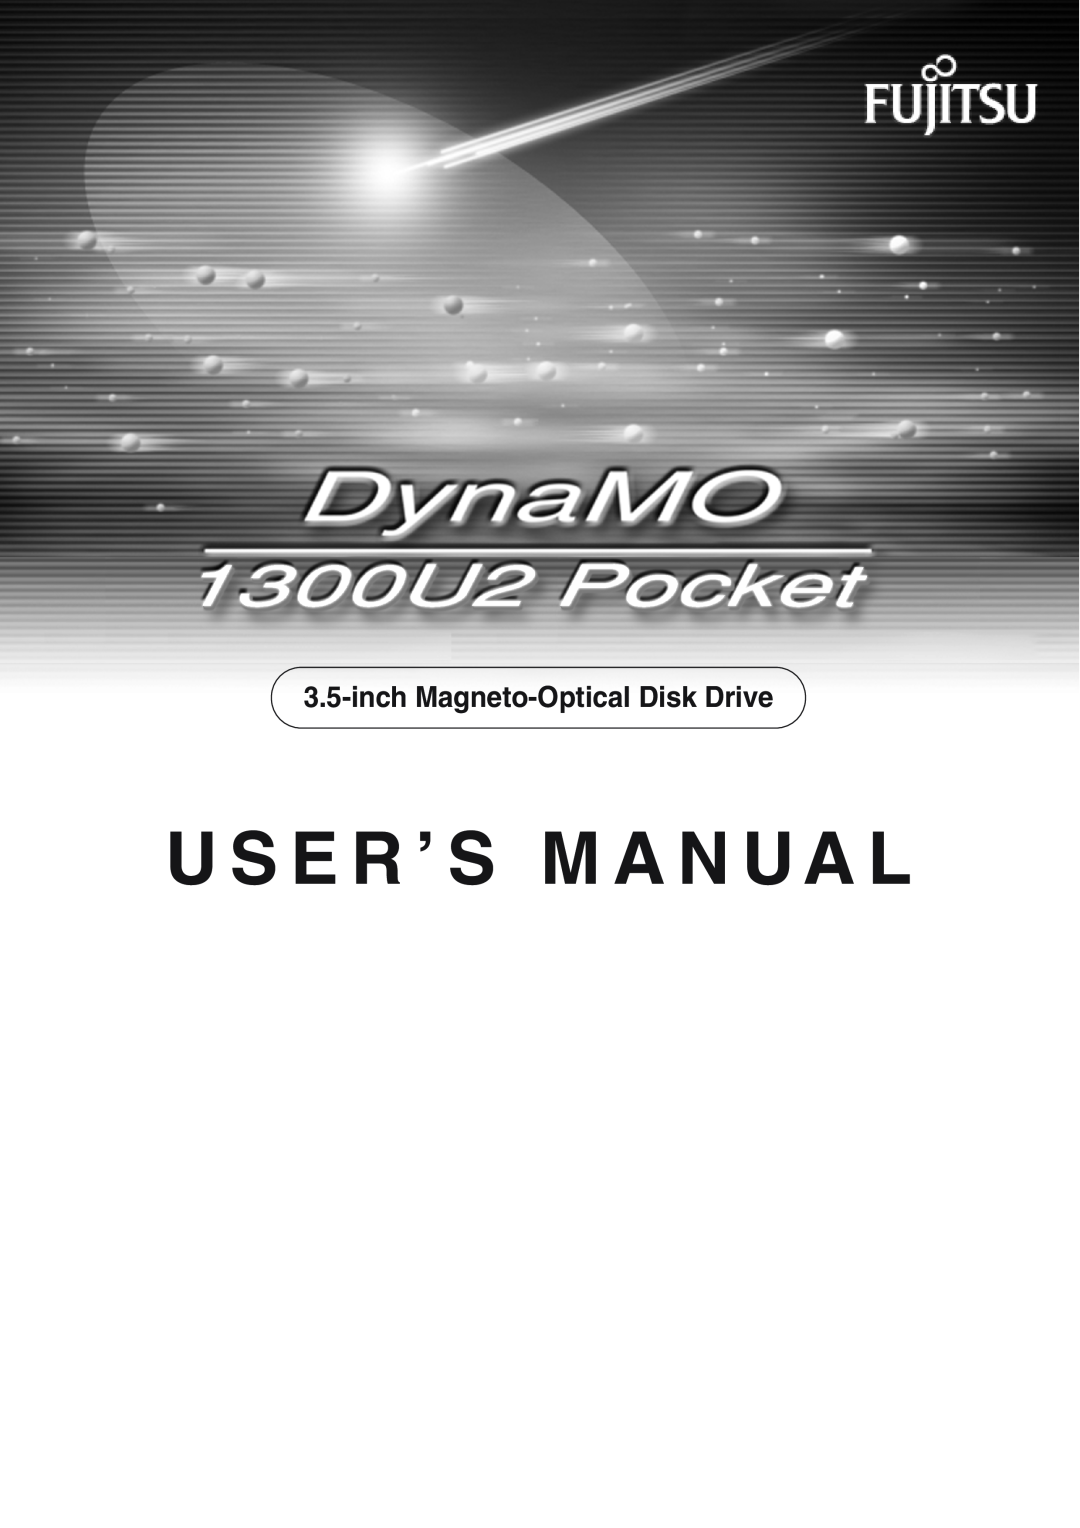 Fujitsu 1300U2 user manual U S E R ’ S M A N Ua L, inch Magneto-Optical Disk Drive 